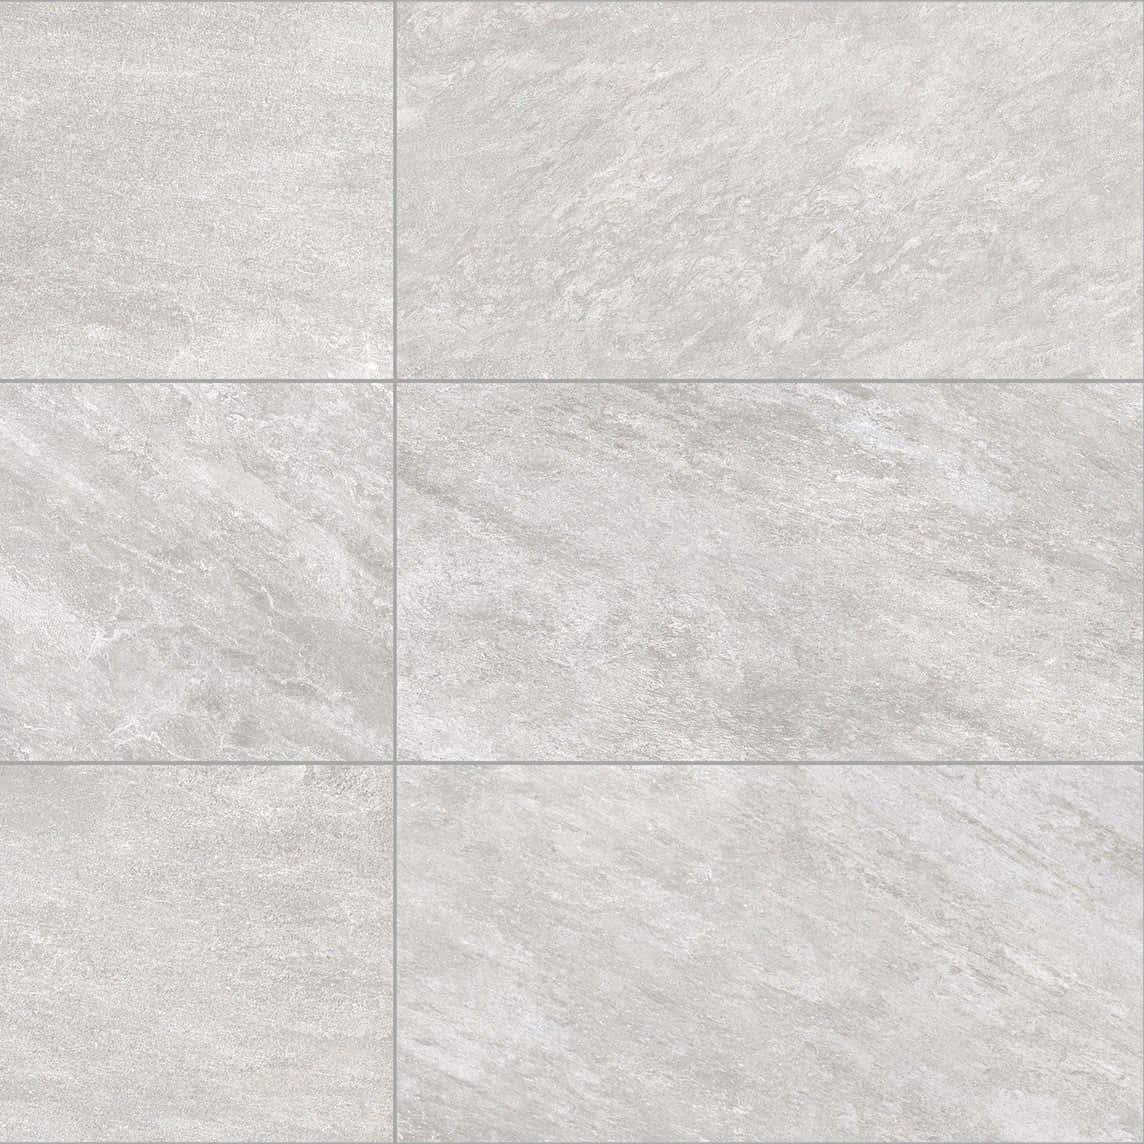 Gray Marble Tile Texture768x768 Wallpaper